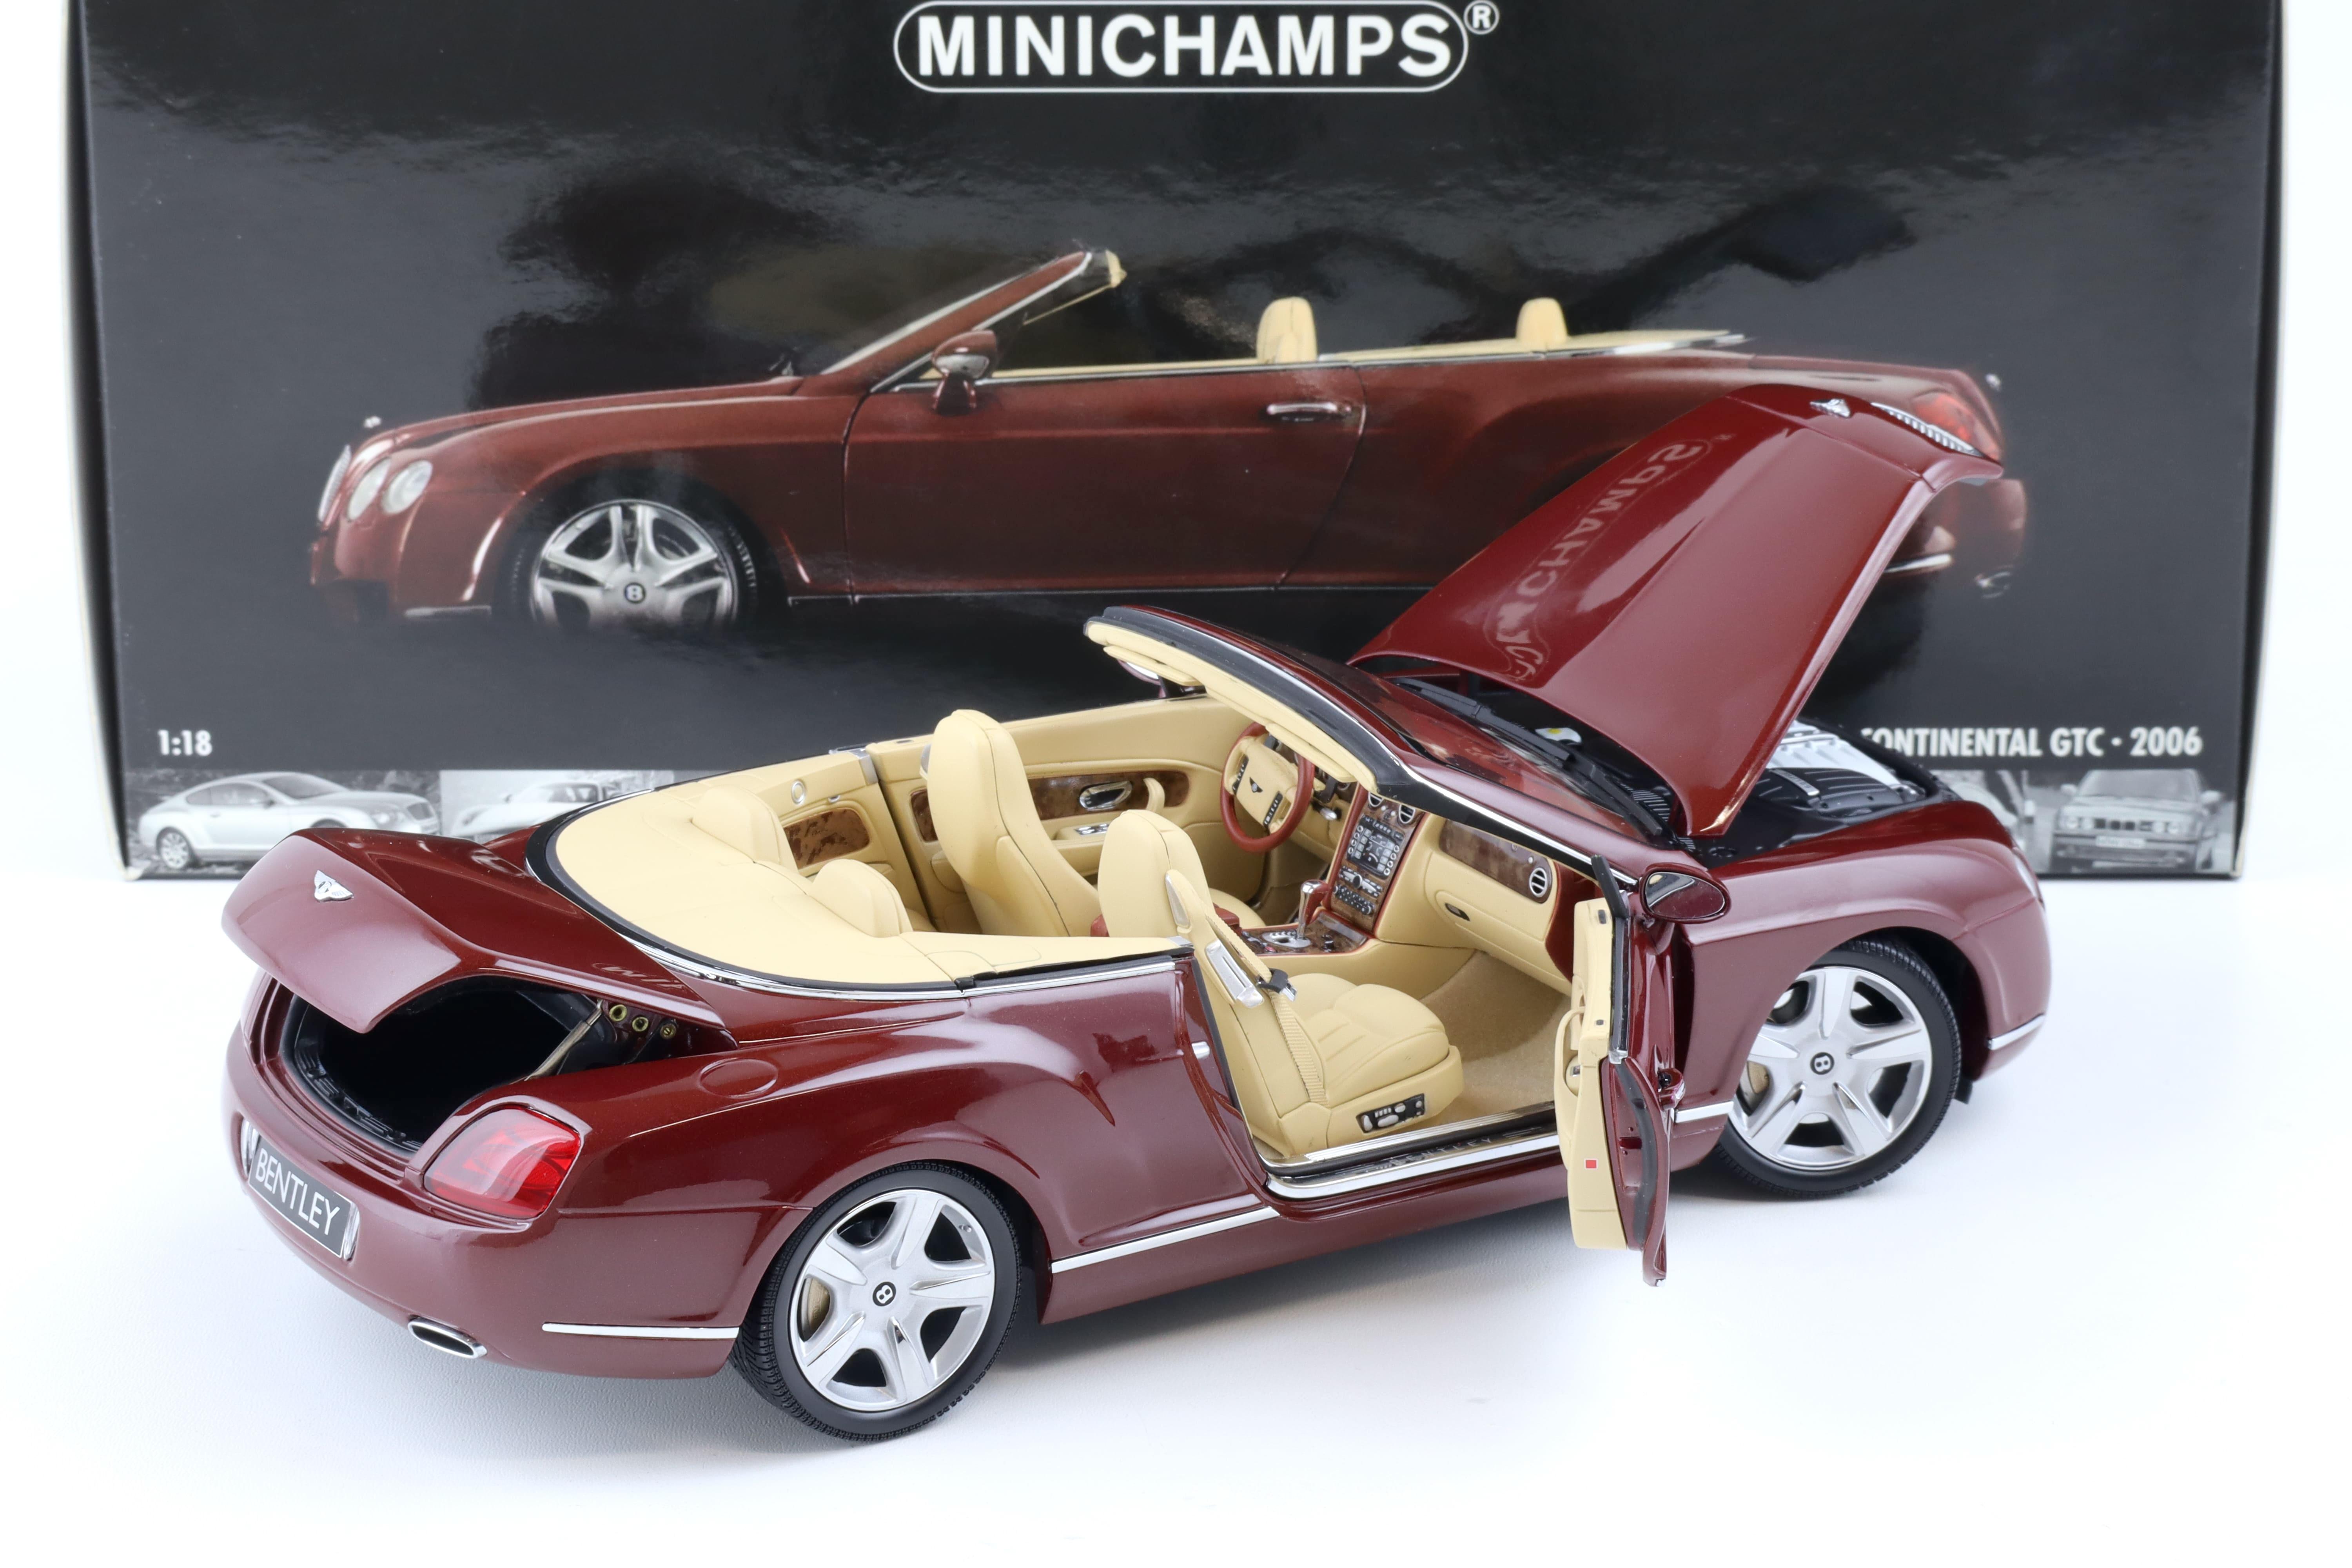 1:18 Minichamps Bentley Continental GTC Convertible 2006 red metallic